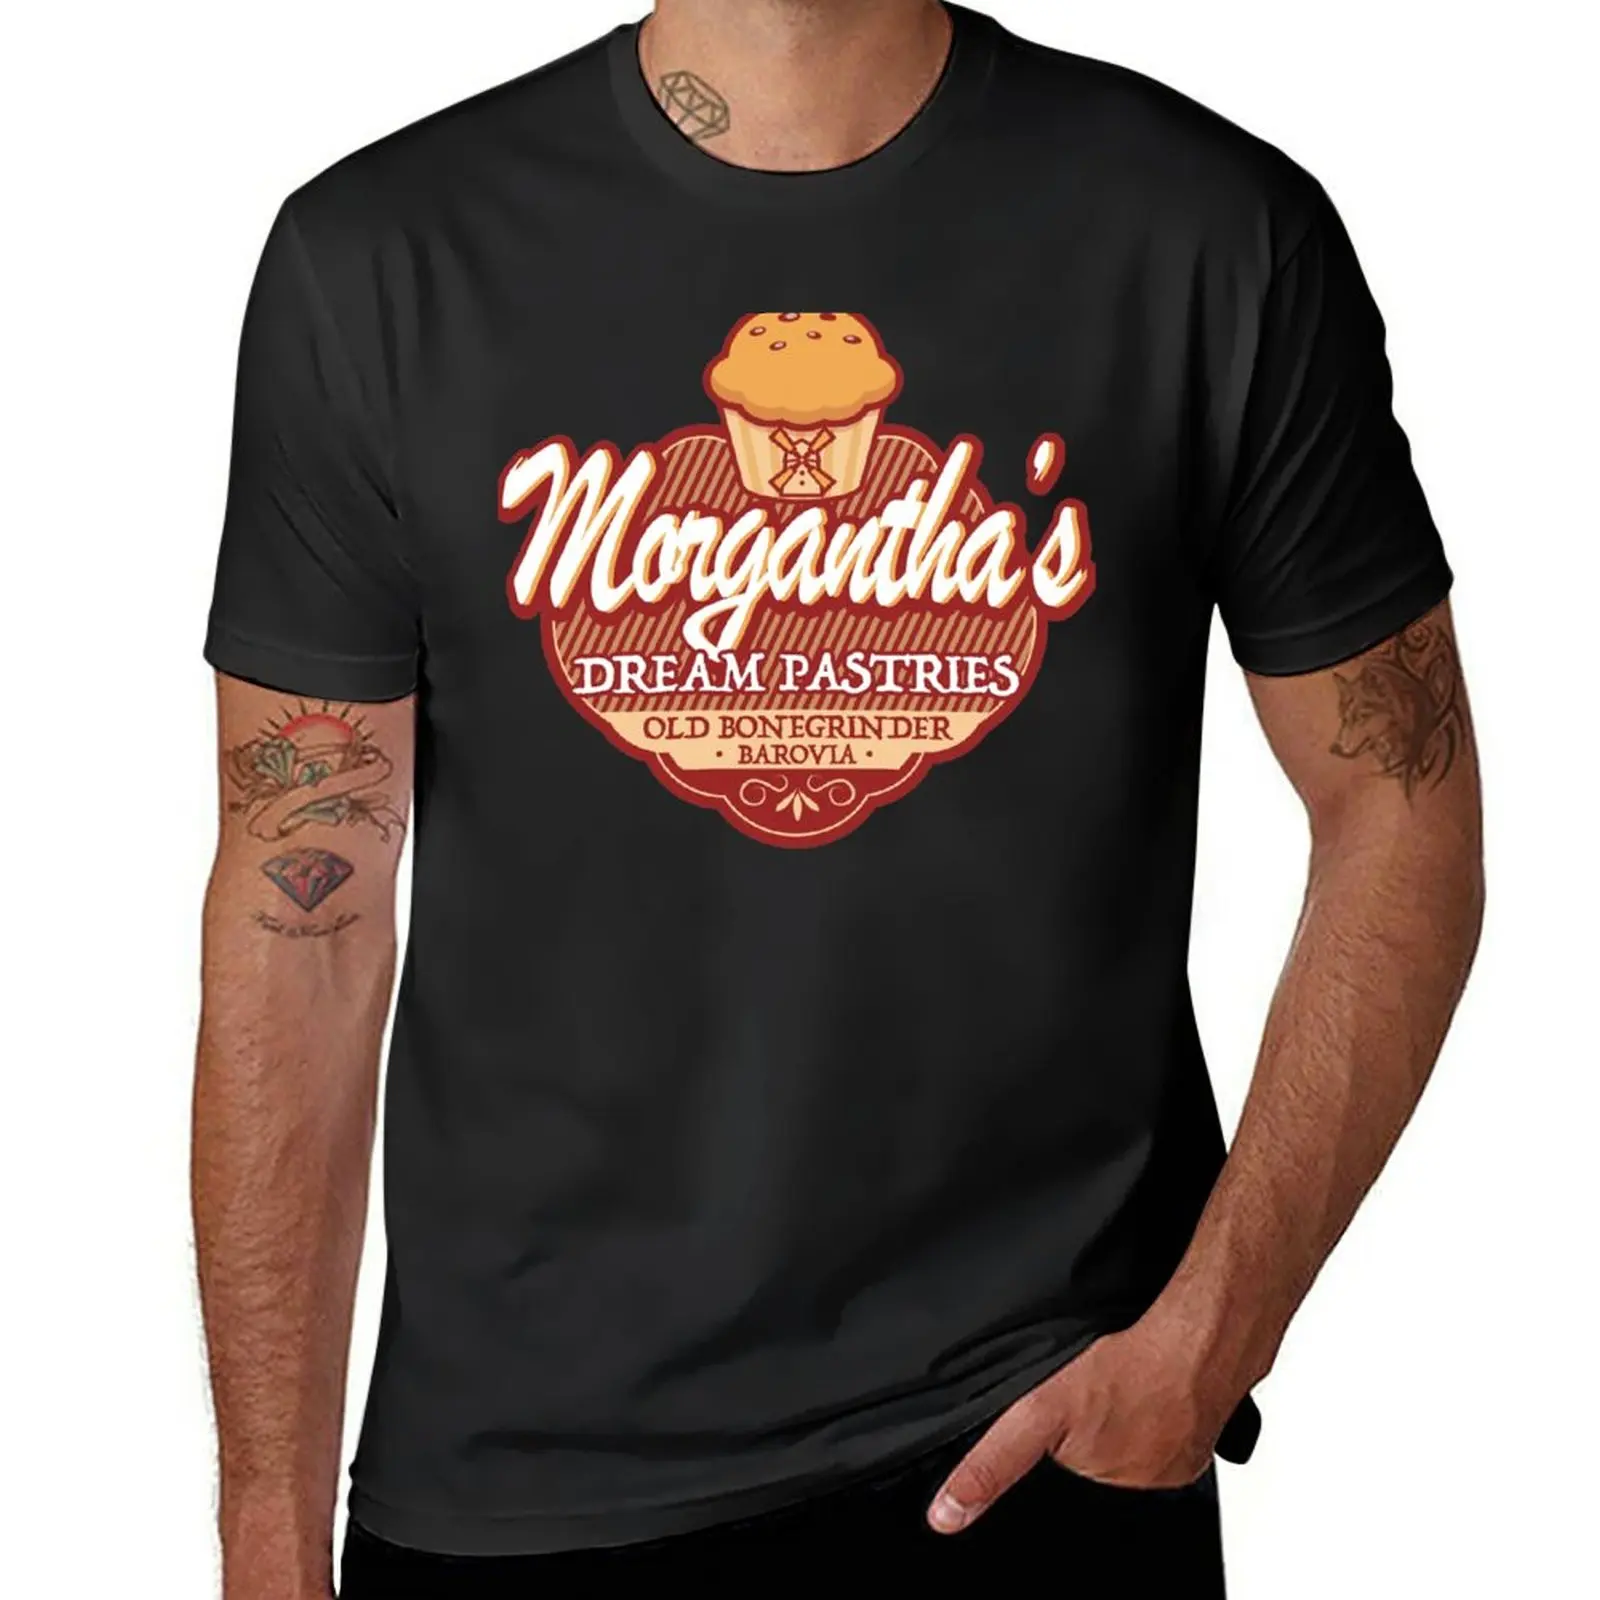 Футболка Morgantha's Dream Pastries, топы больших размеров, футболки больших размеров, футболки оверсайз, мужская хлопковая футболка